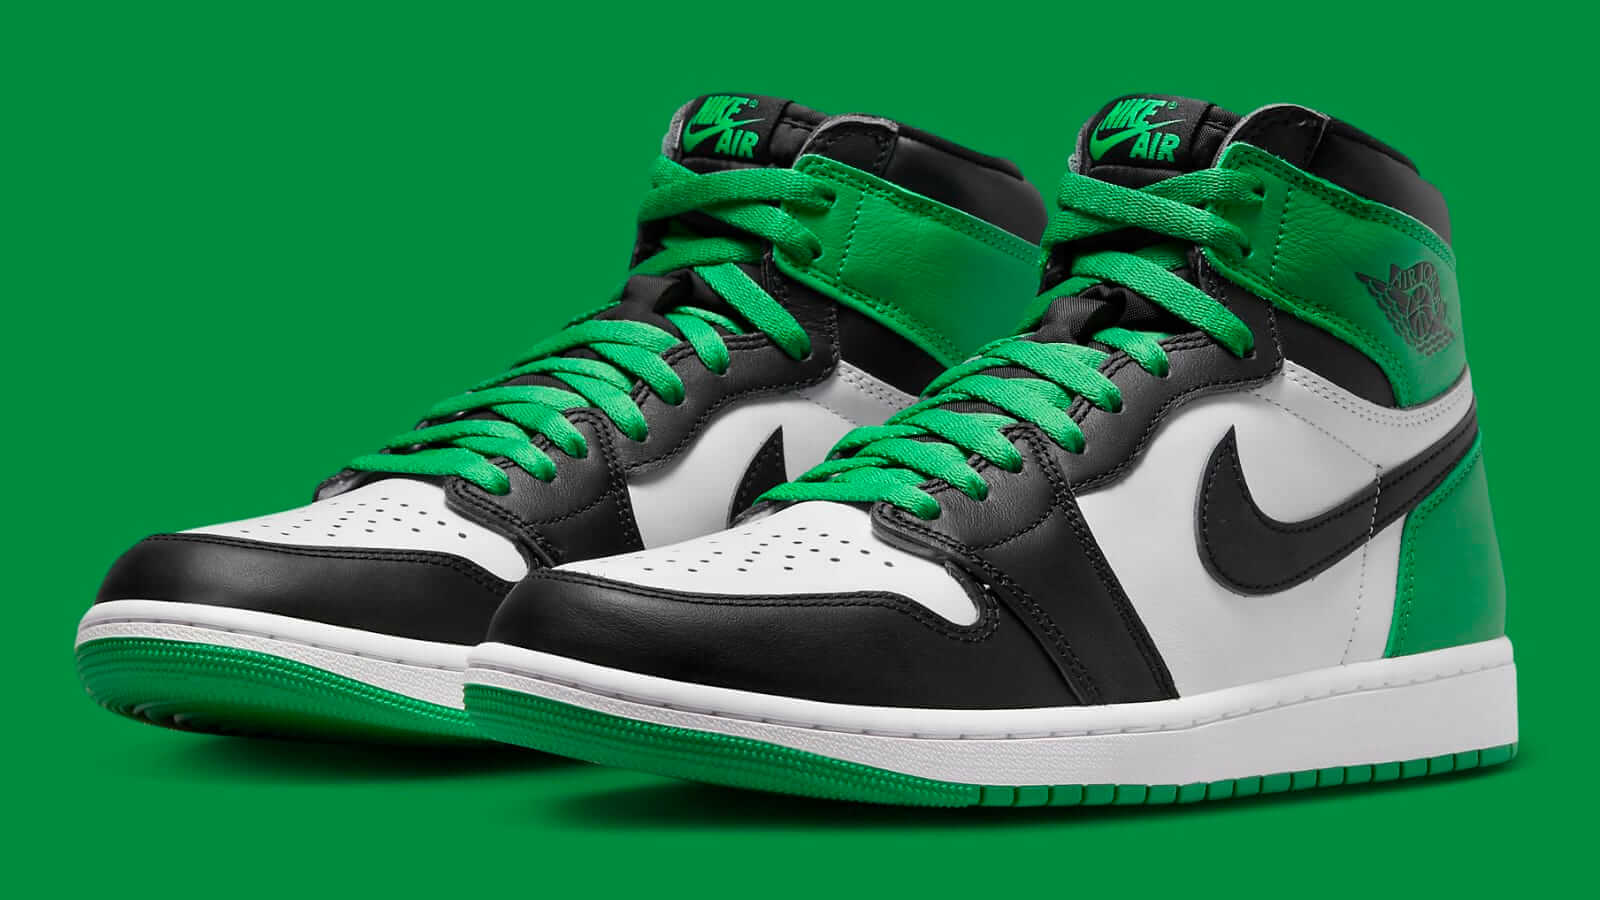 Dropping Soon: The Air Jordan 1 Retro High OG “Lucky Green”